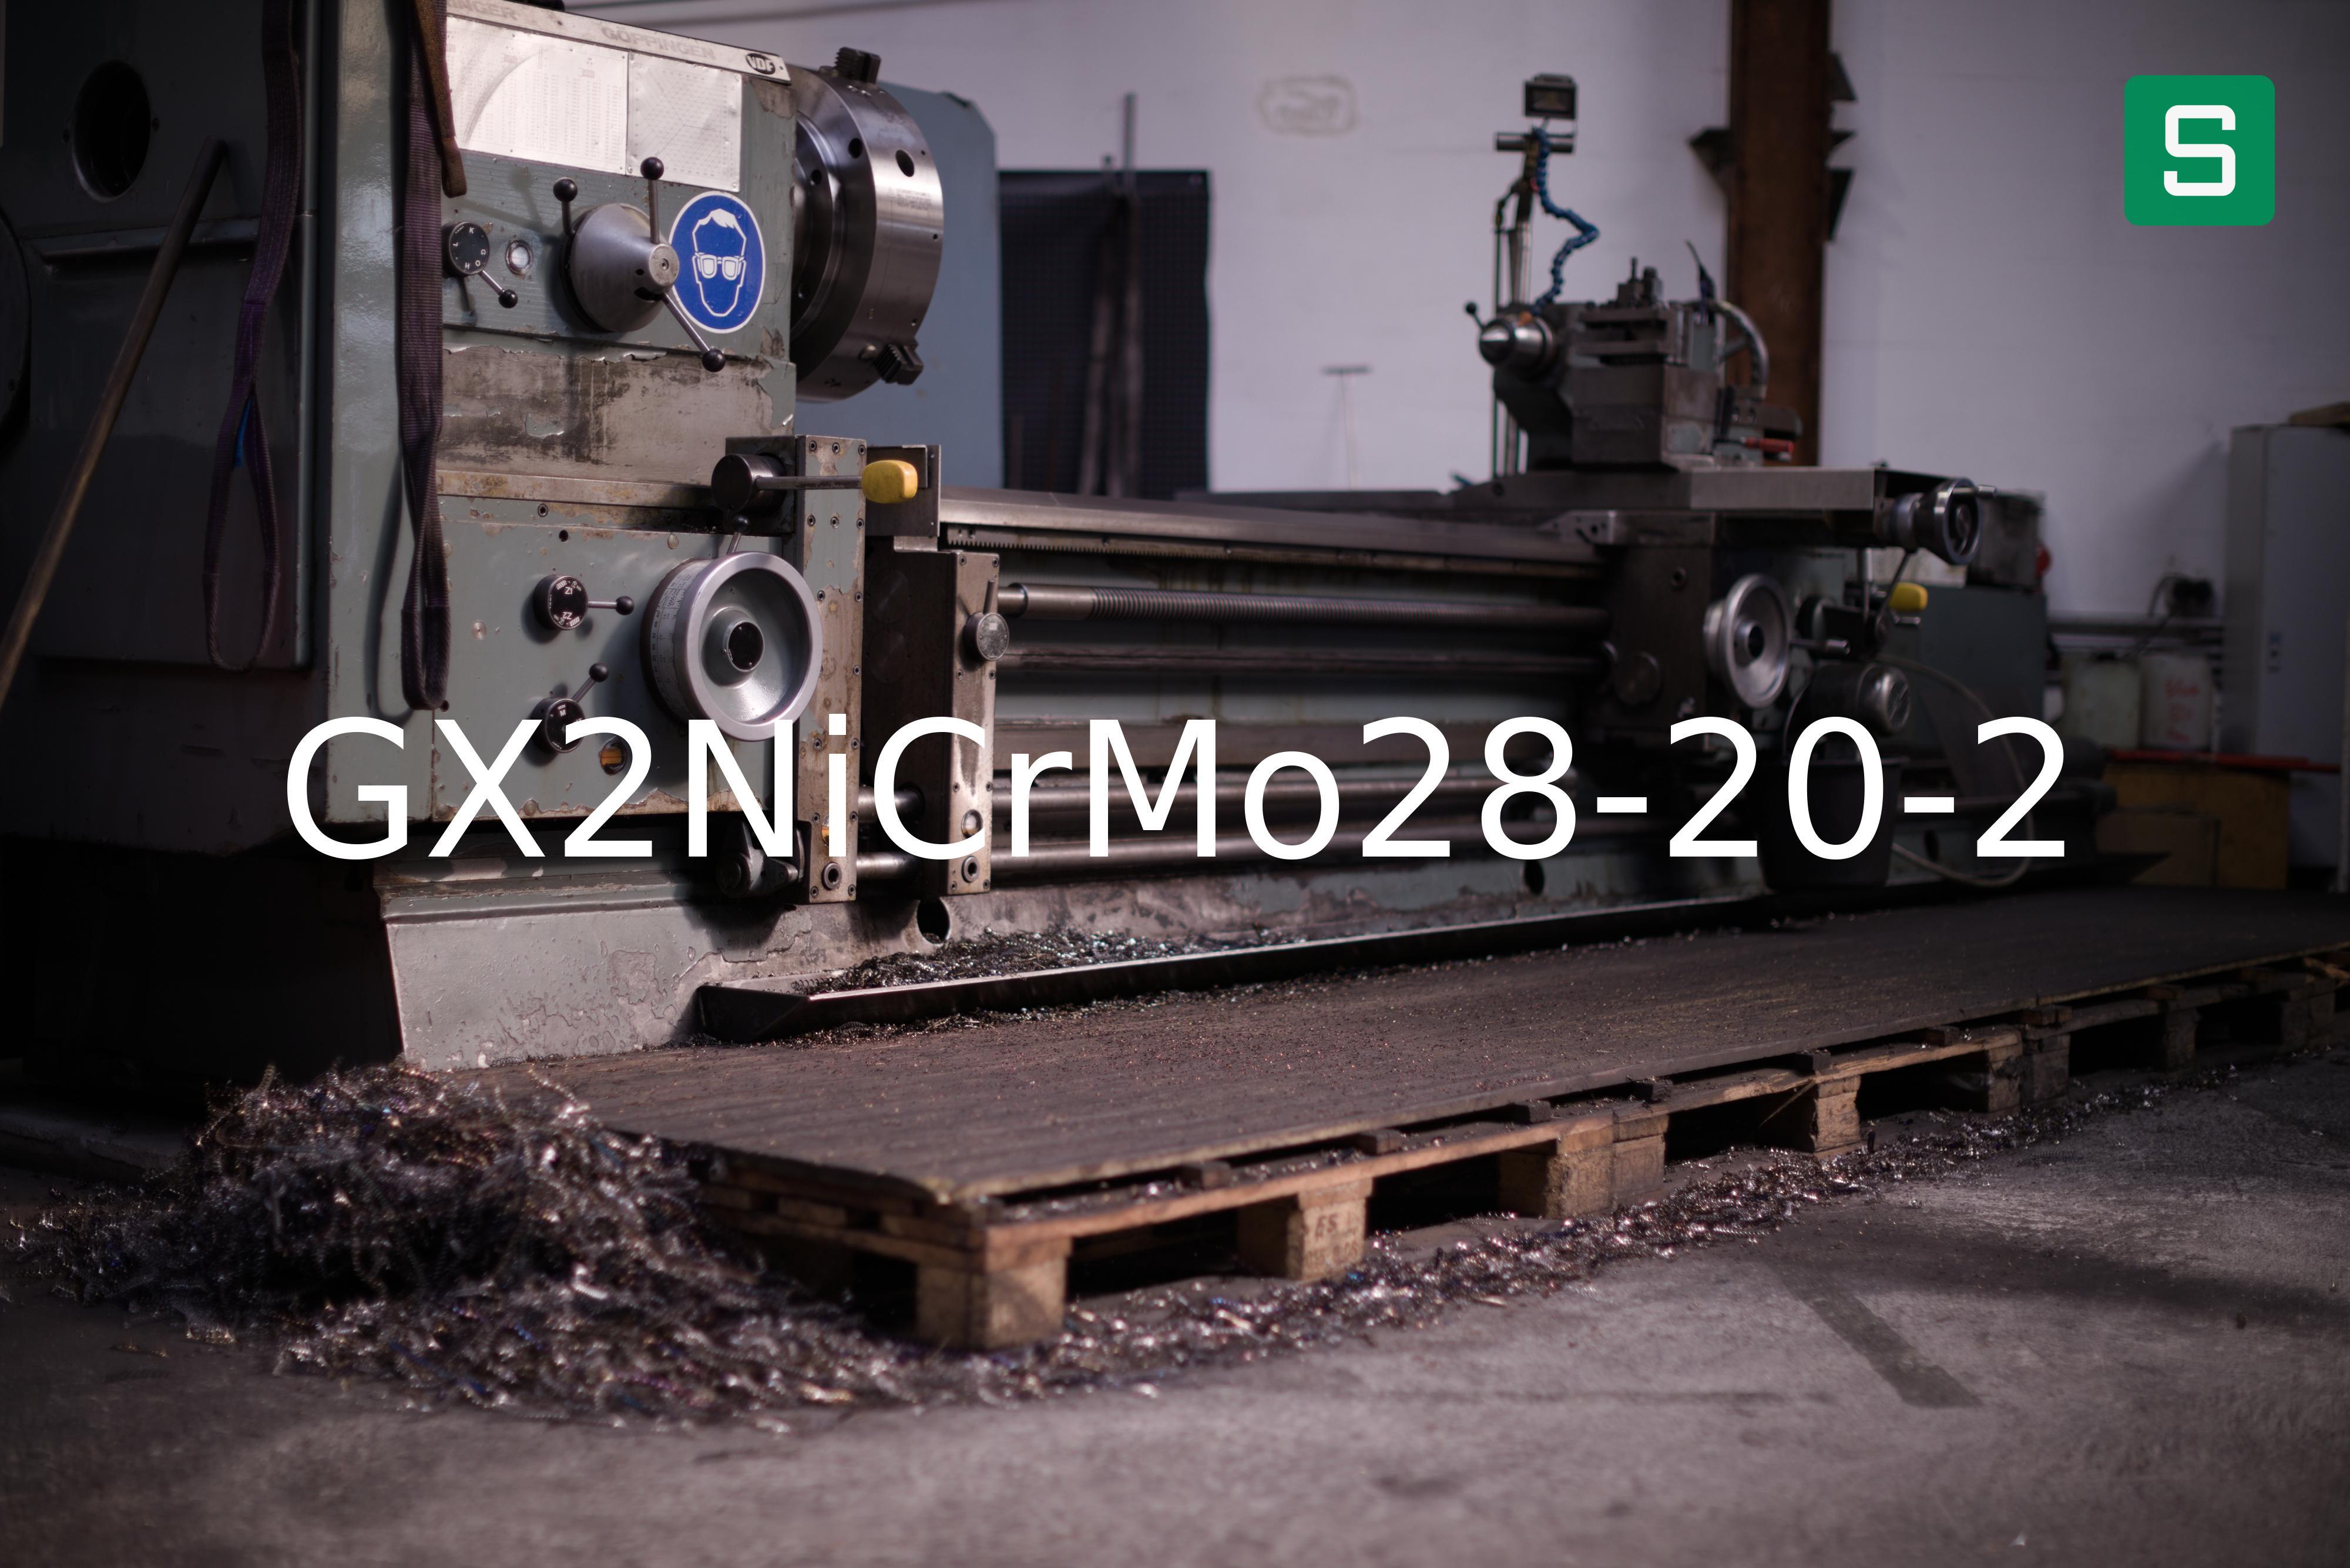 Steel Material: GX2NiCrMo28-20-2